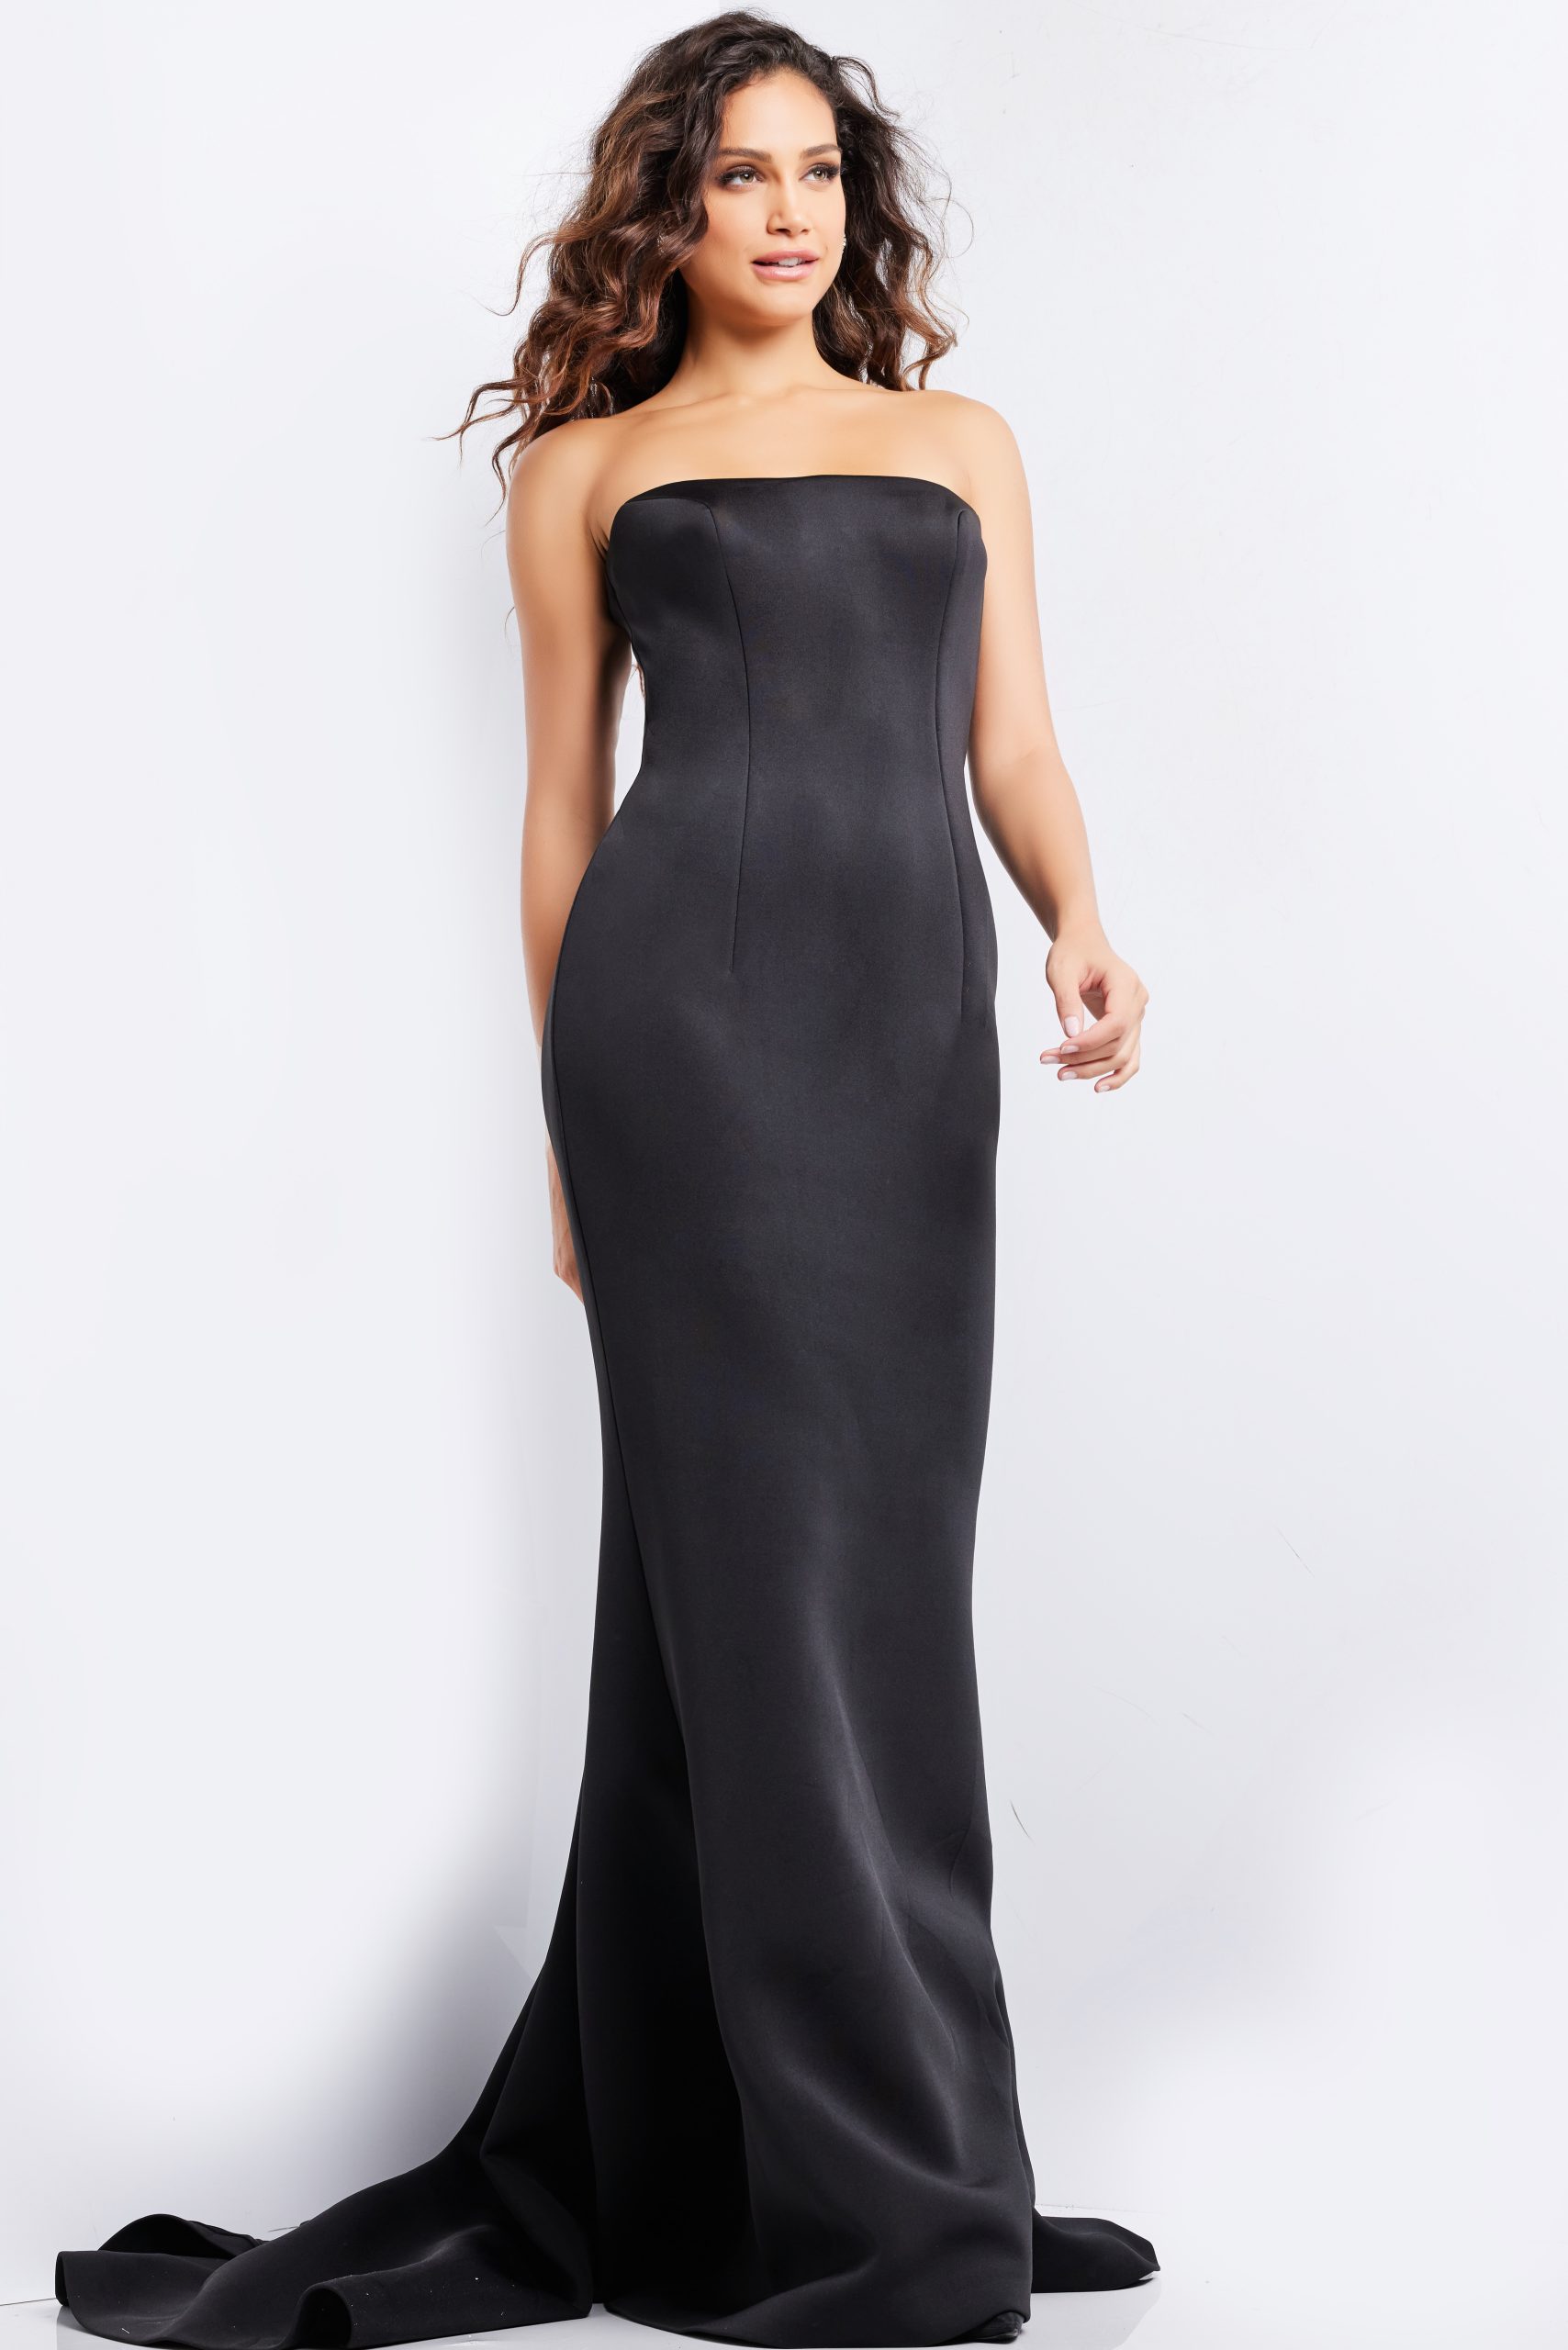 Black Strapless Simple Dress 07427